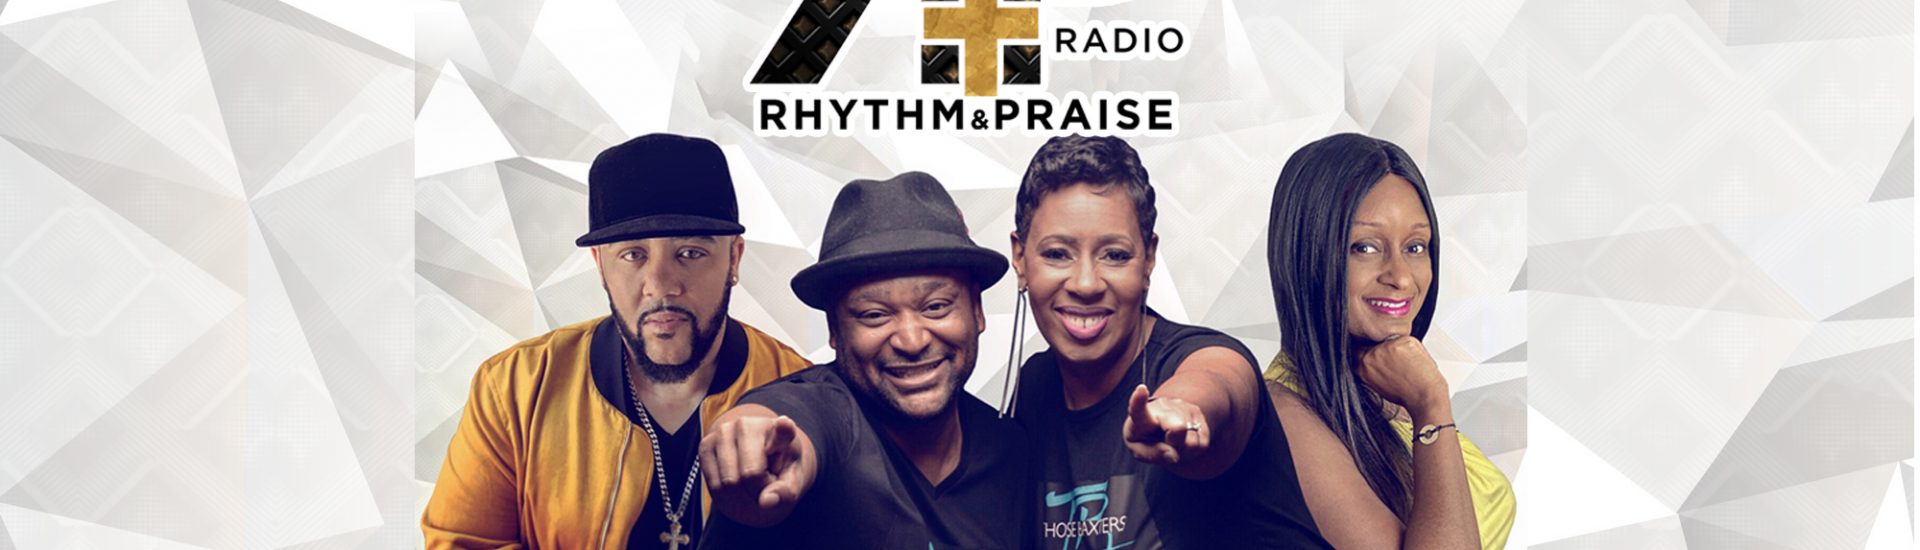 Rhythm & Praise Radio